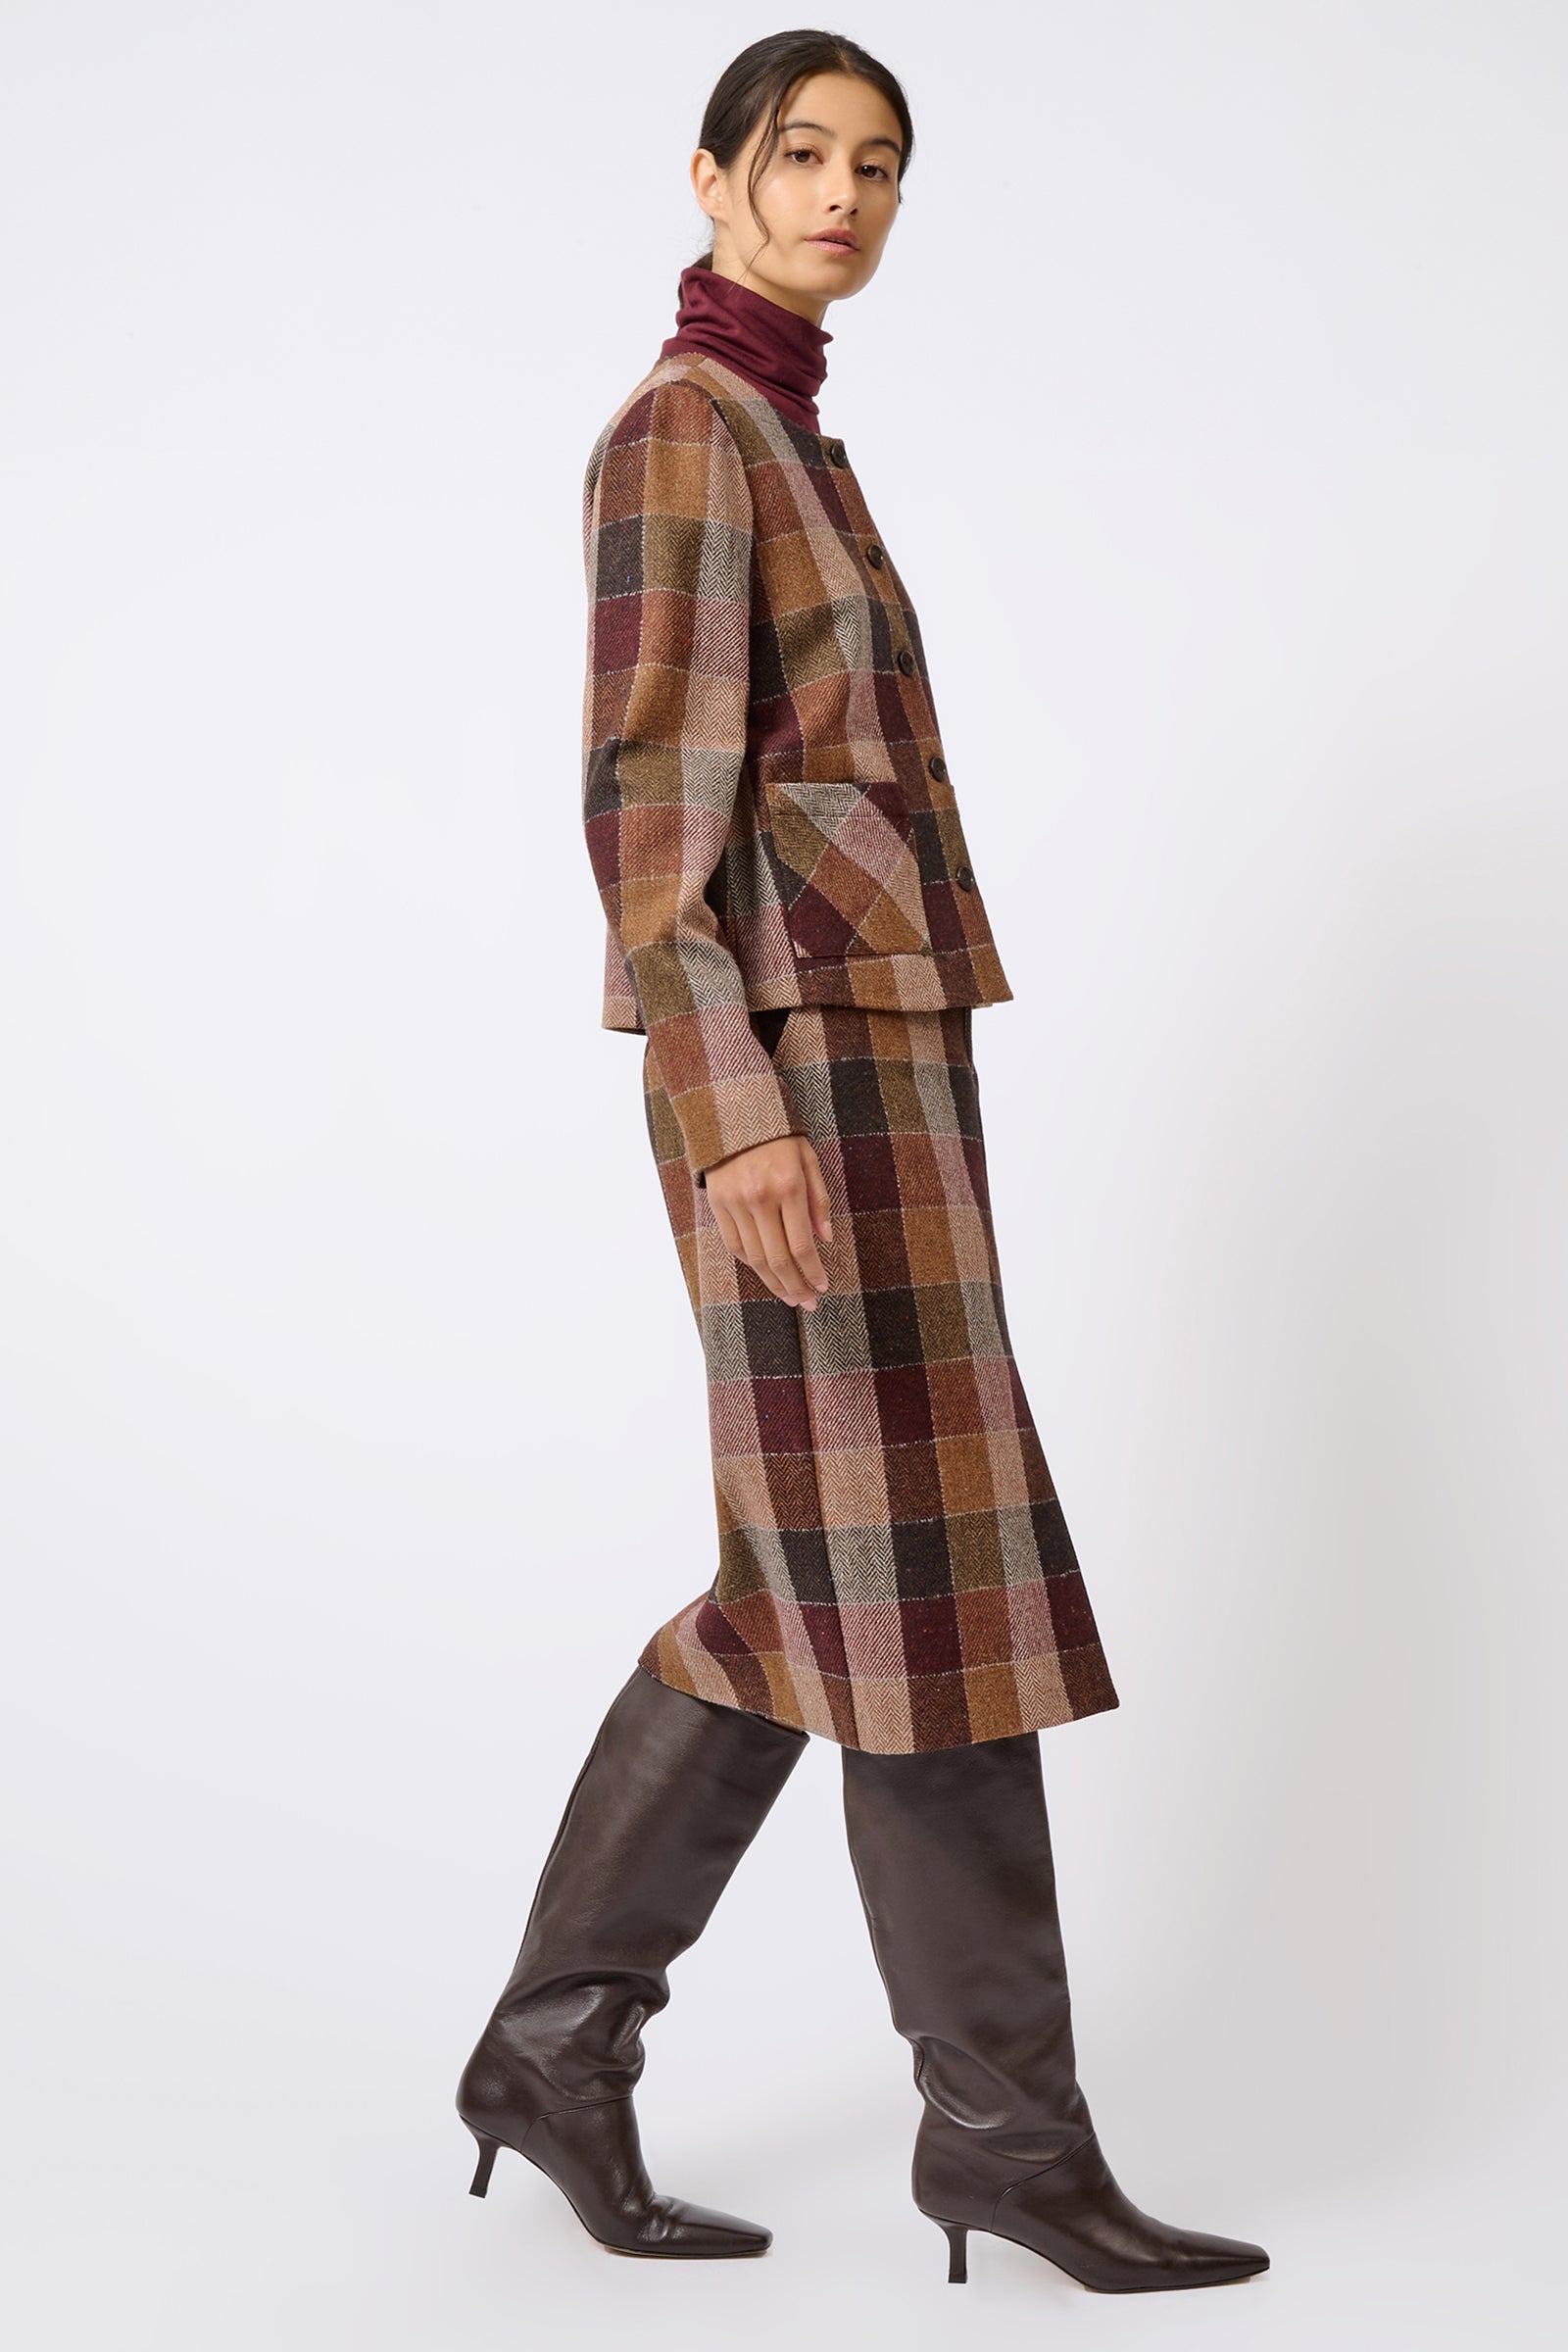 Kal Rieman Caroline Trouser Skirt in Patchwork Fabric on Model Wearing Matching Jacket Full Side View